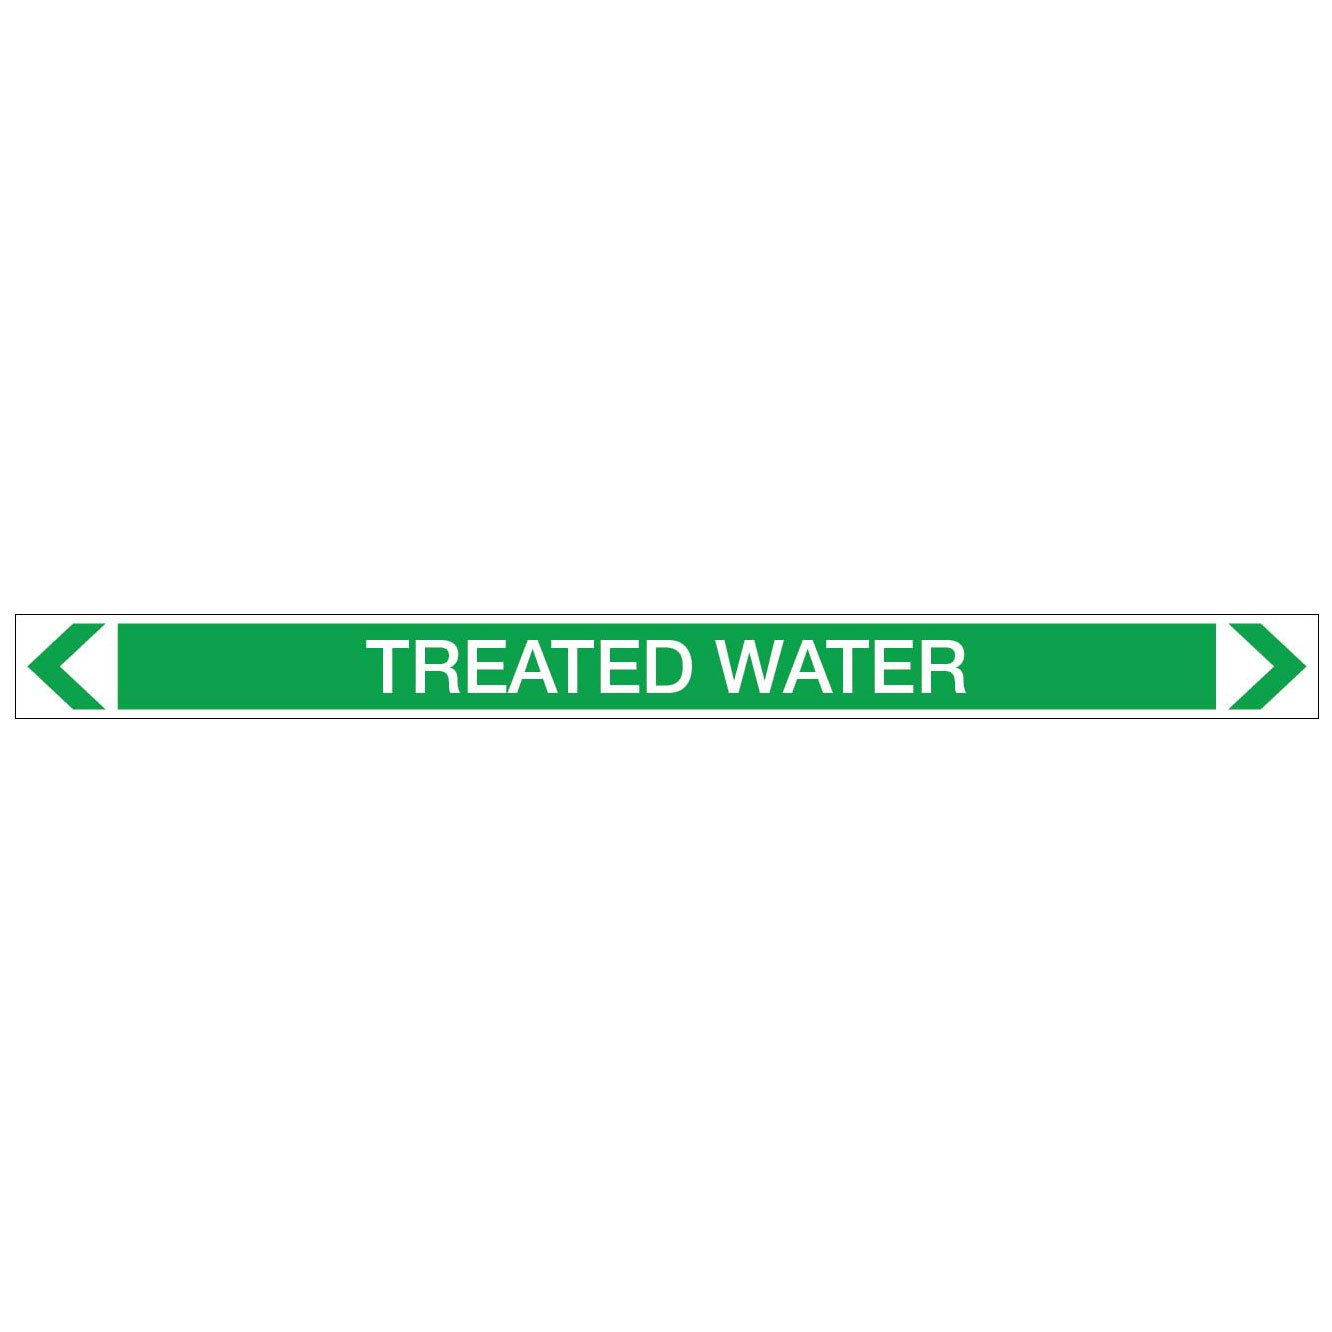 Water - Treated Water - Pipe Marker Sticker